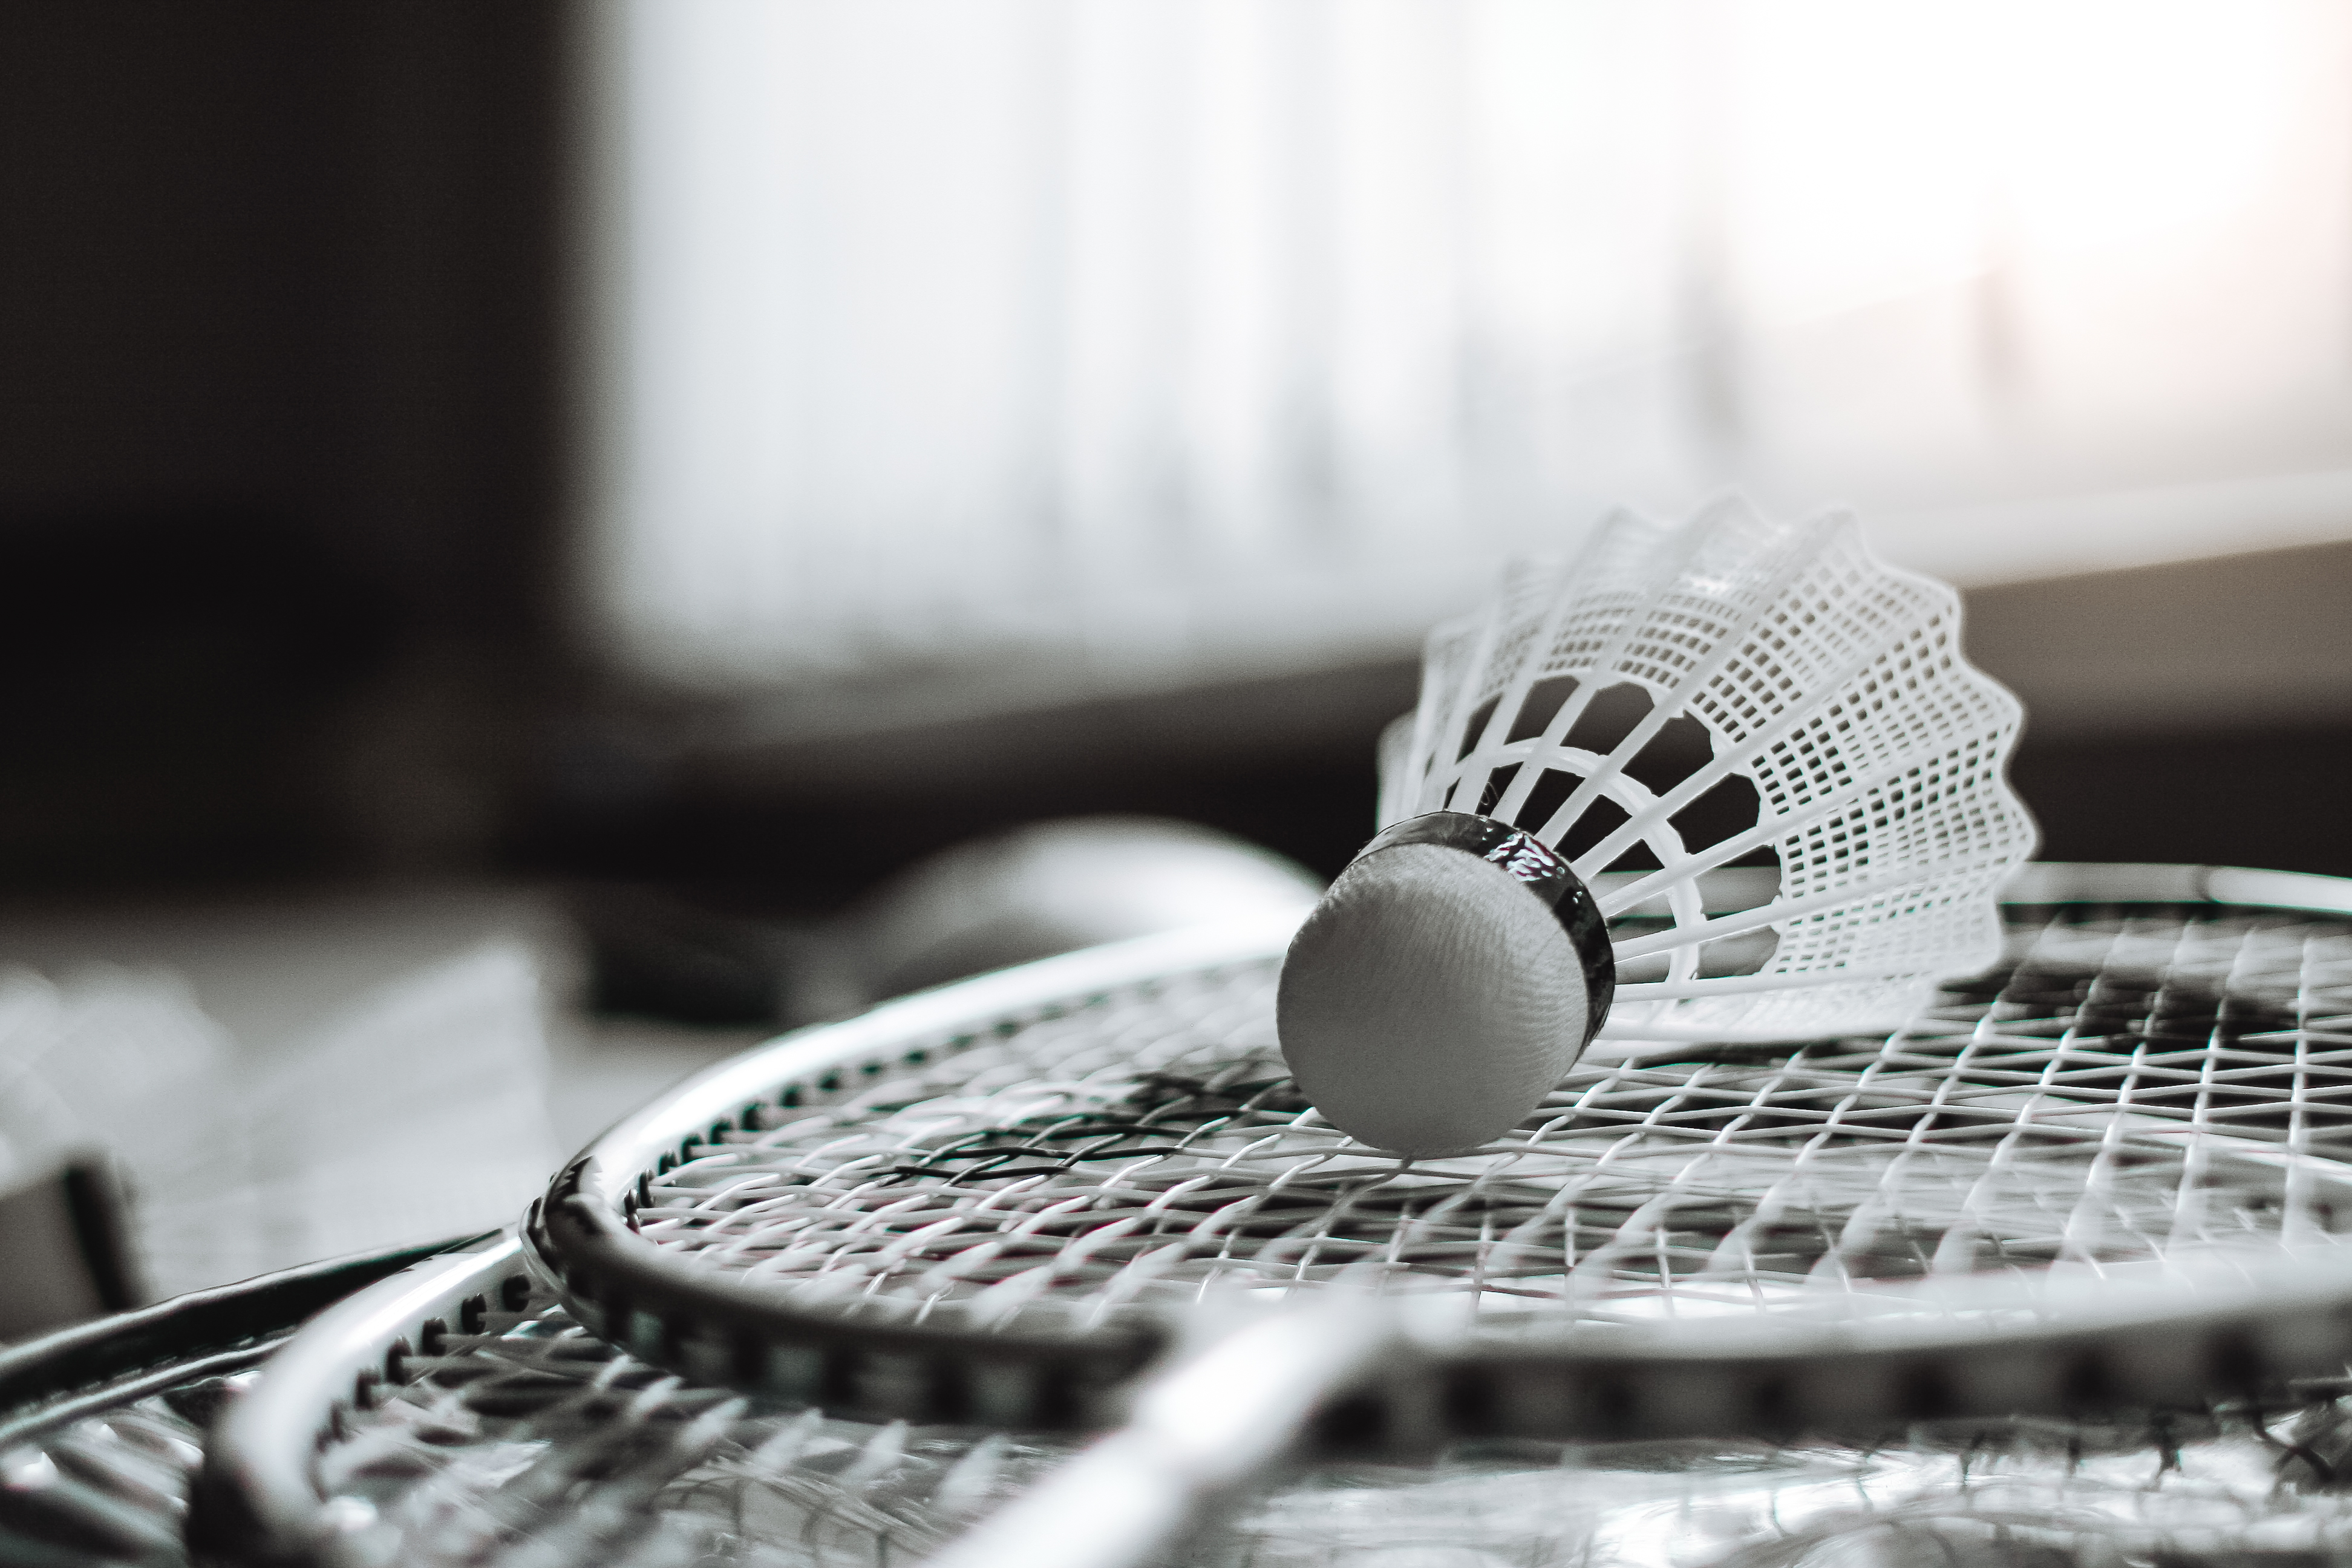 1 Badminton Racket Free Photos and Images picjumbo